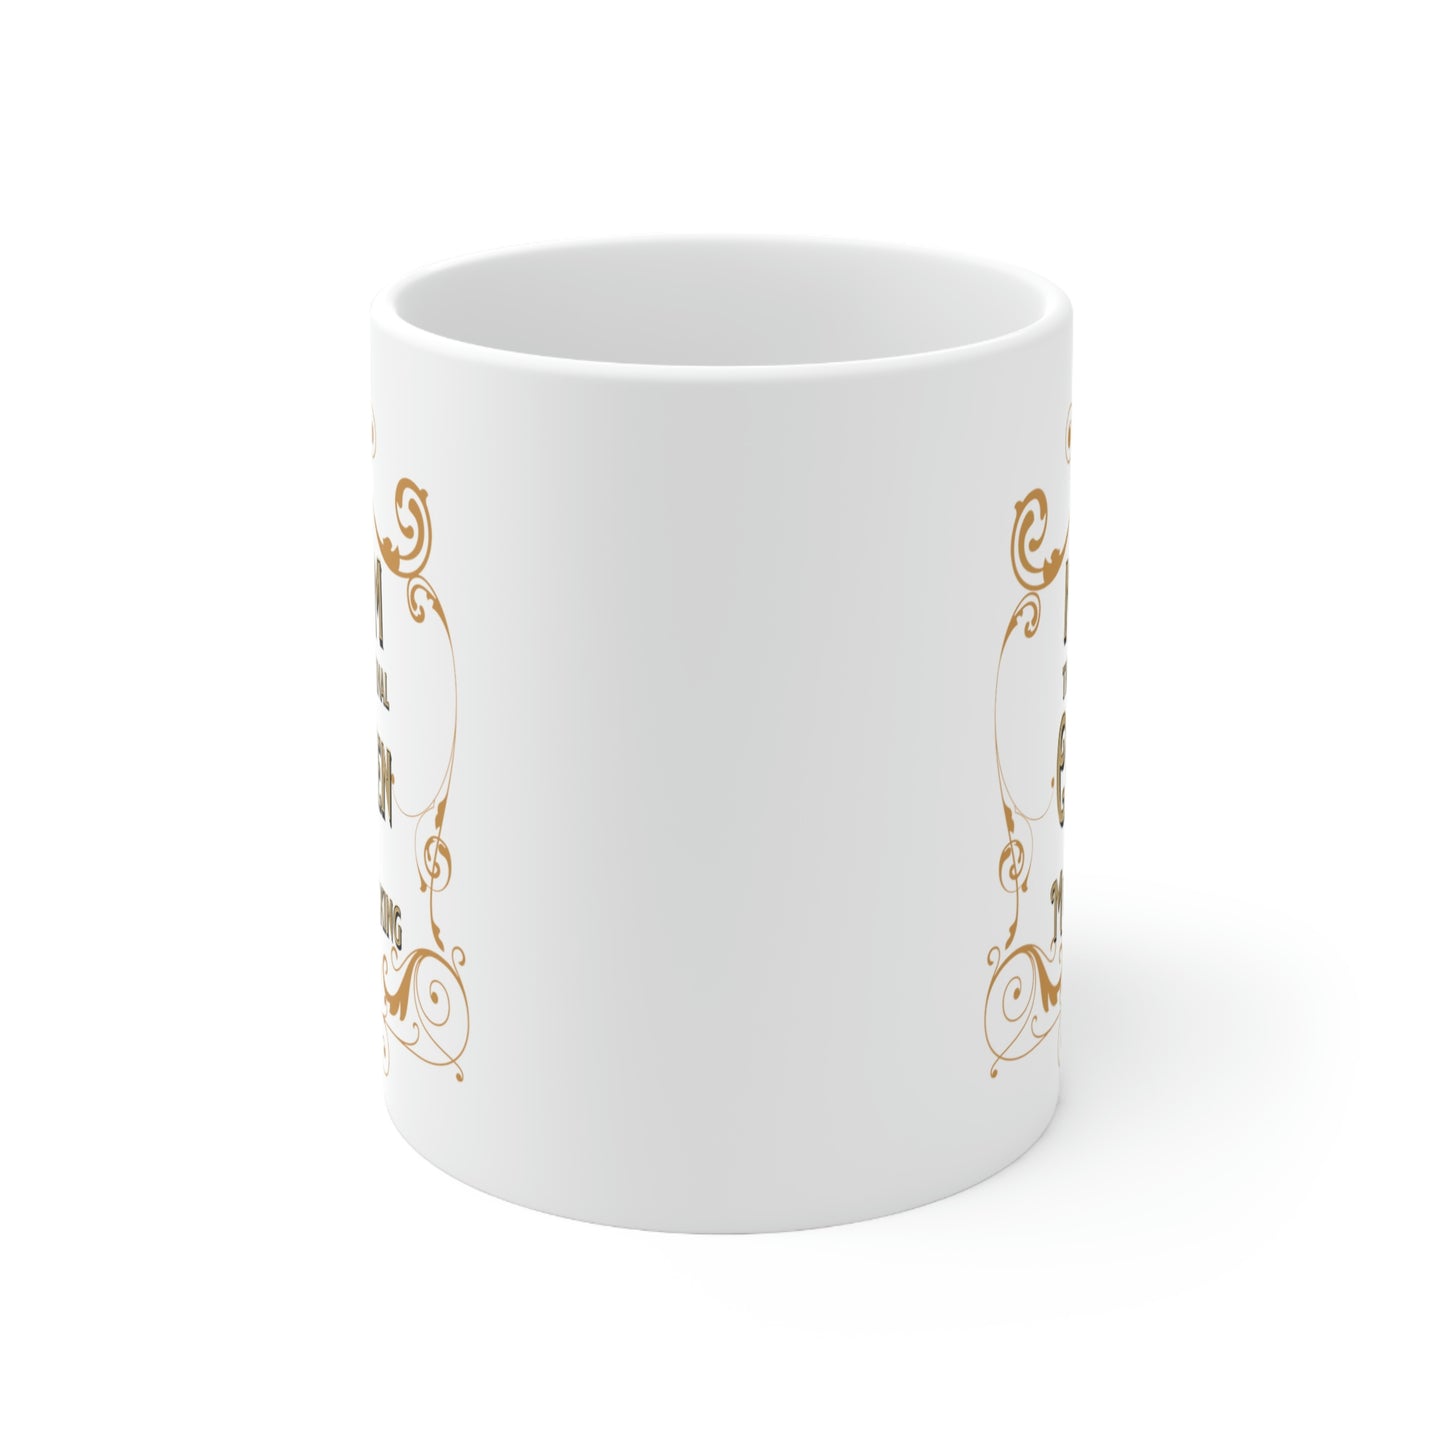 Ceramic Mug 11oz, Mom the Original Queen of Multitasking, Gifts for Mom, Mother's Day